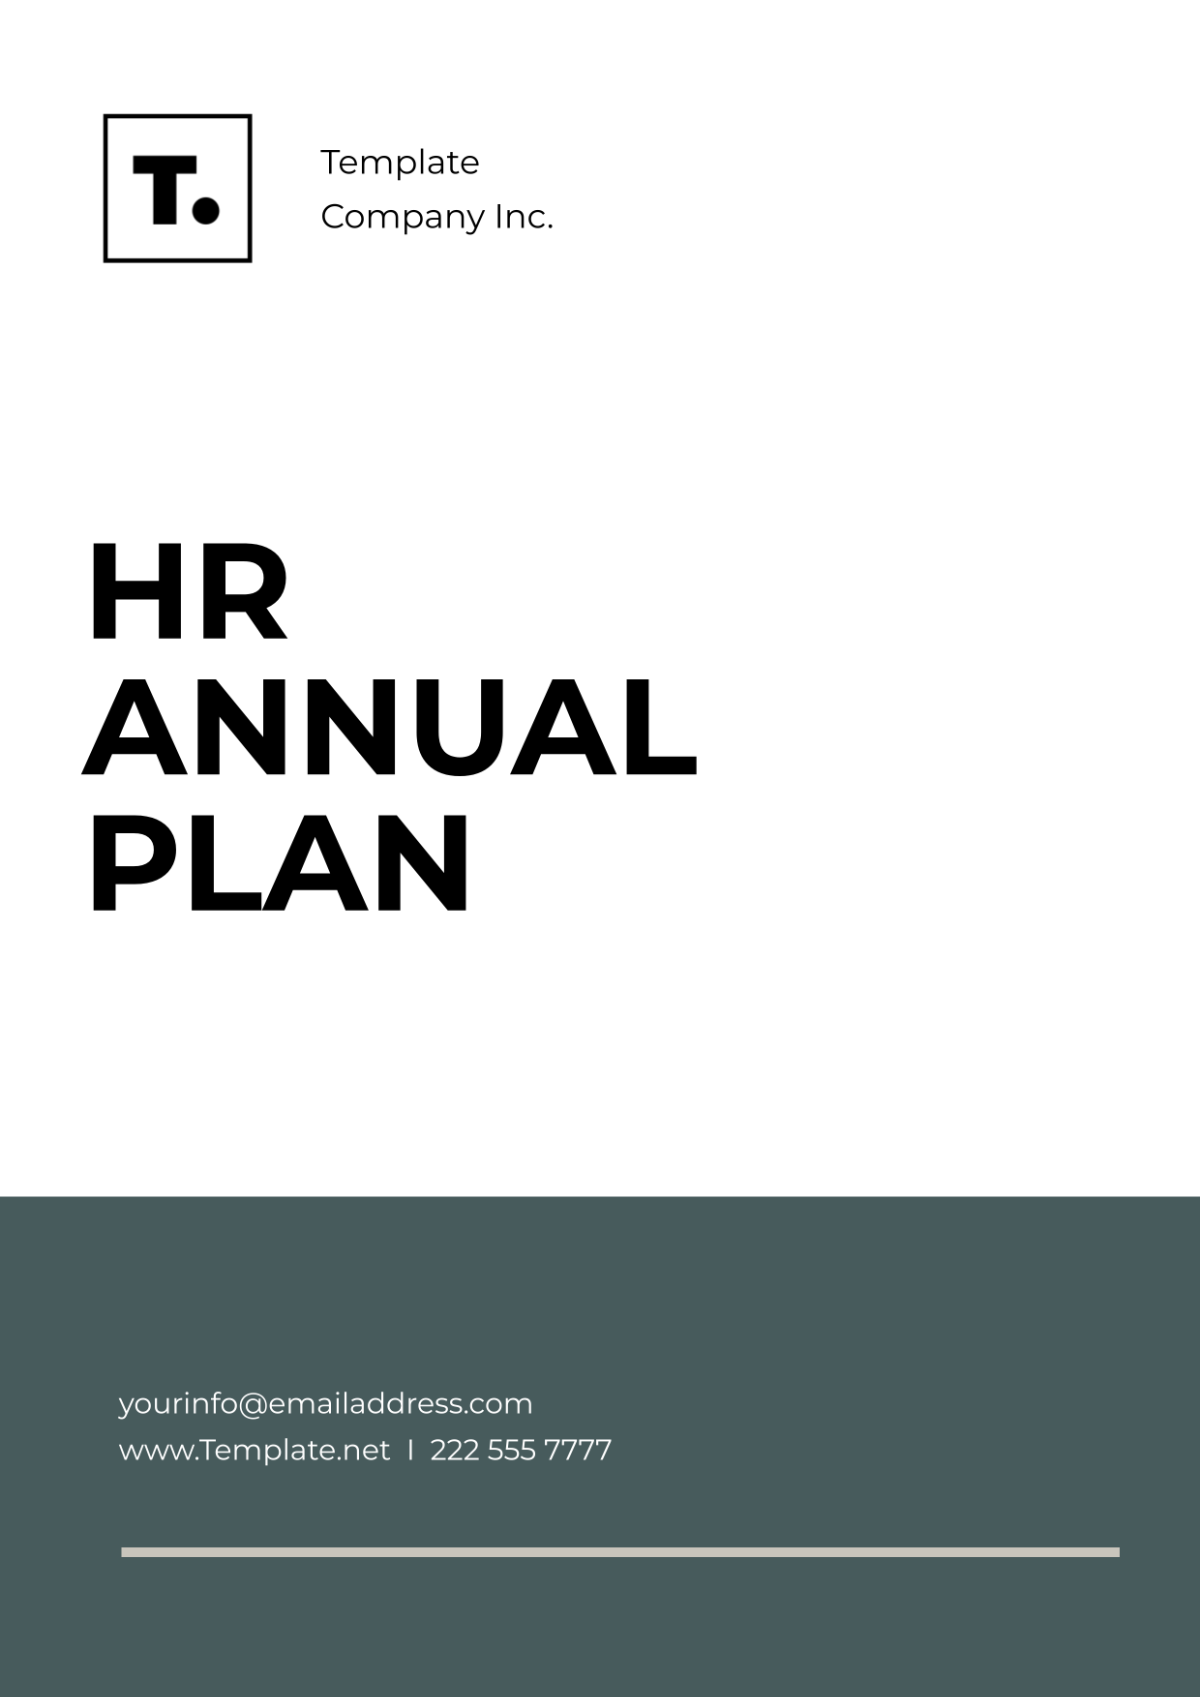 Free HR Annual Plan Template